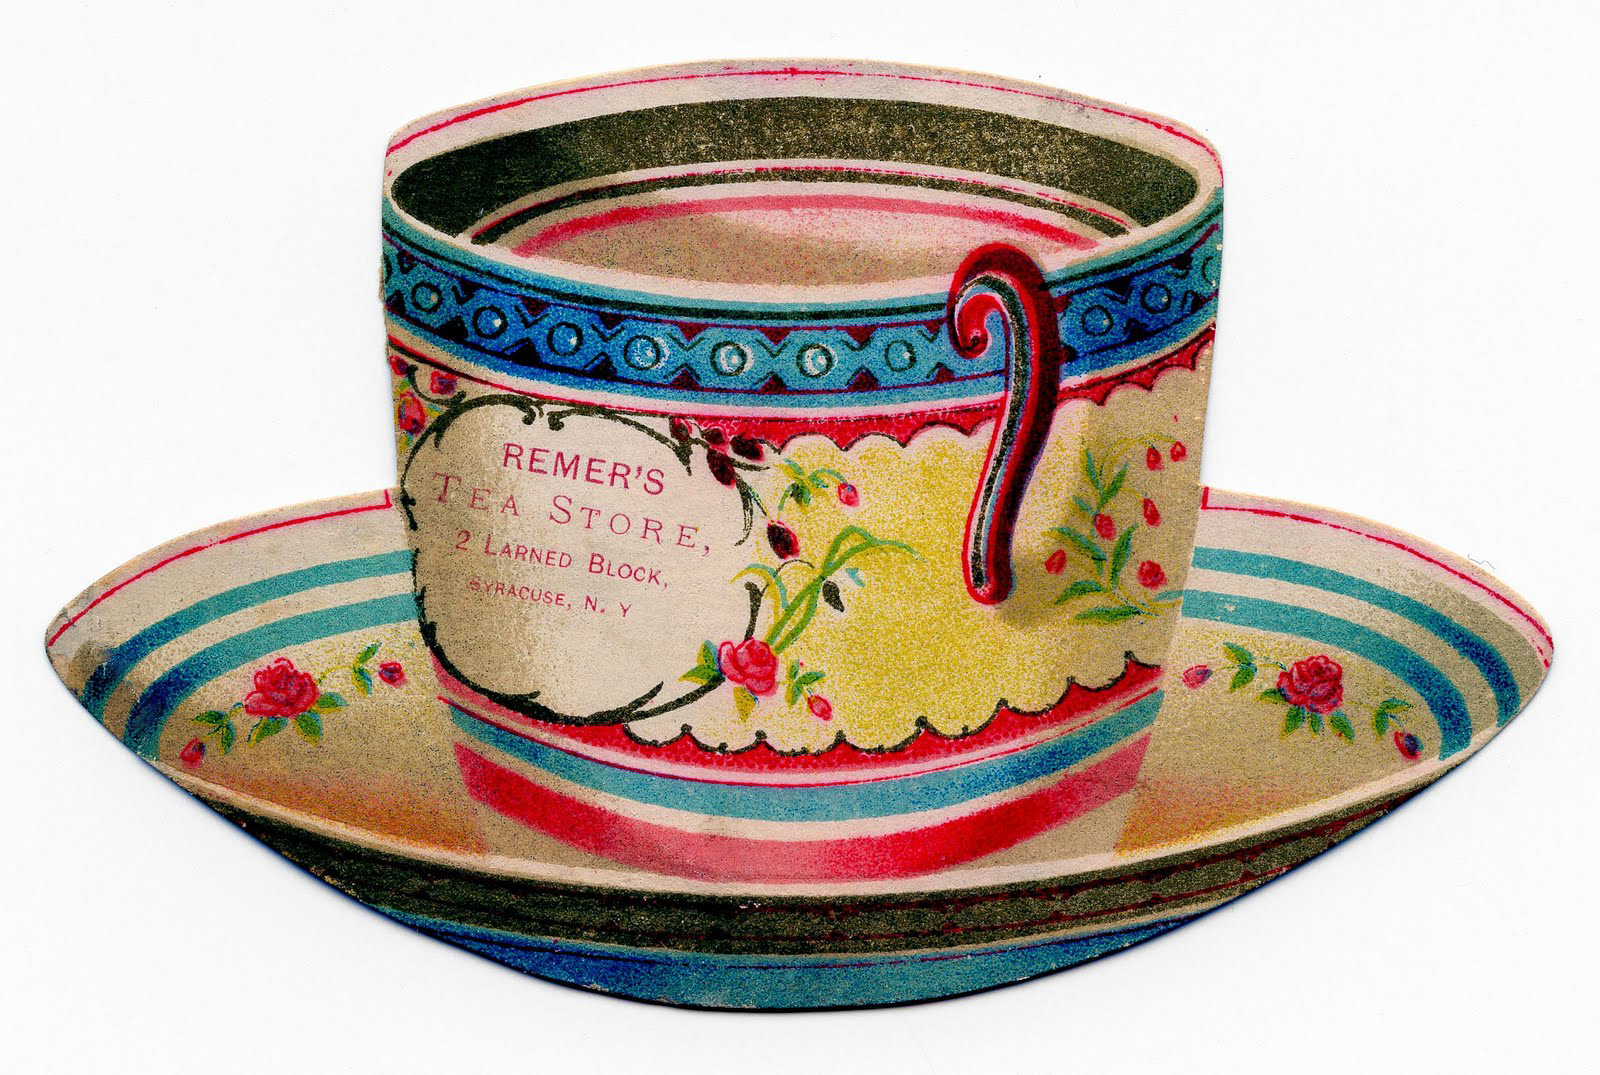 Vintage Tea Cup Image